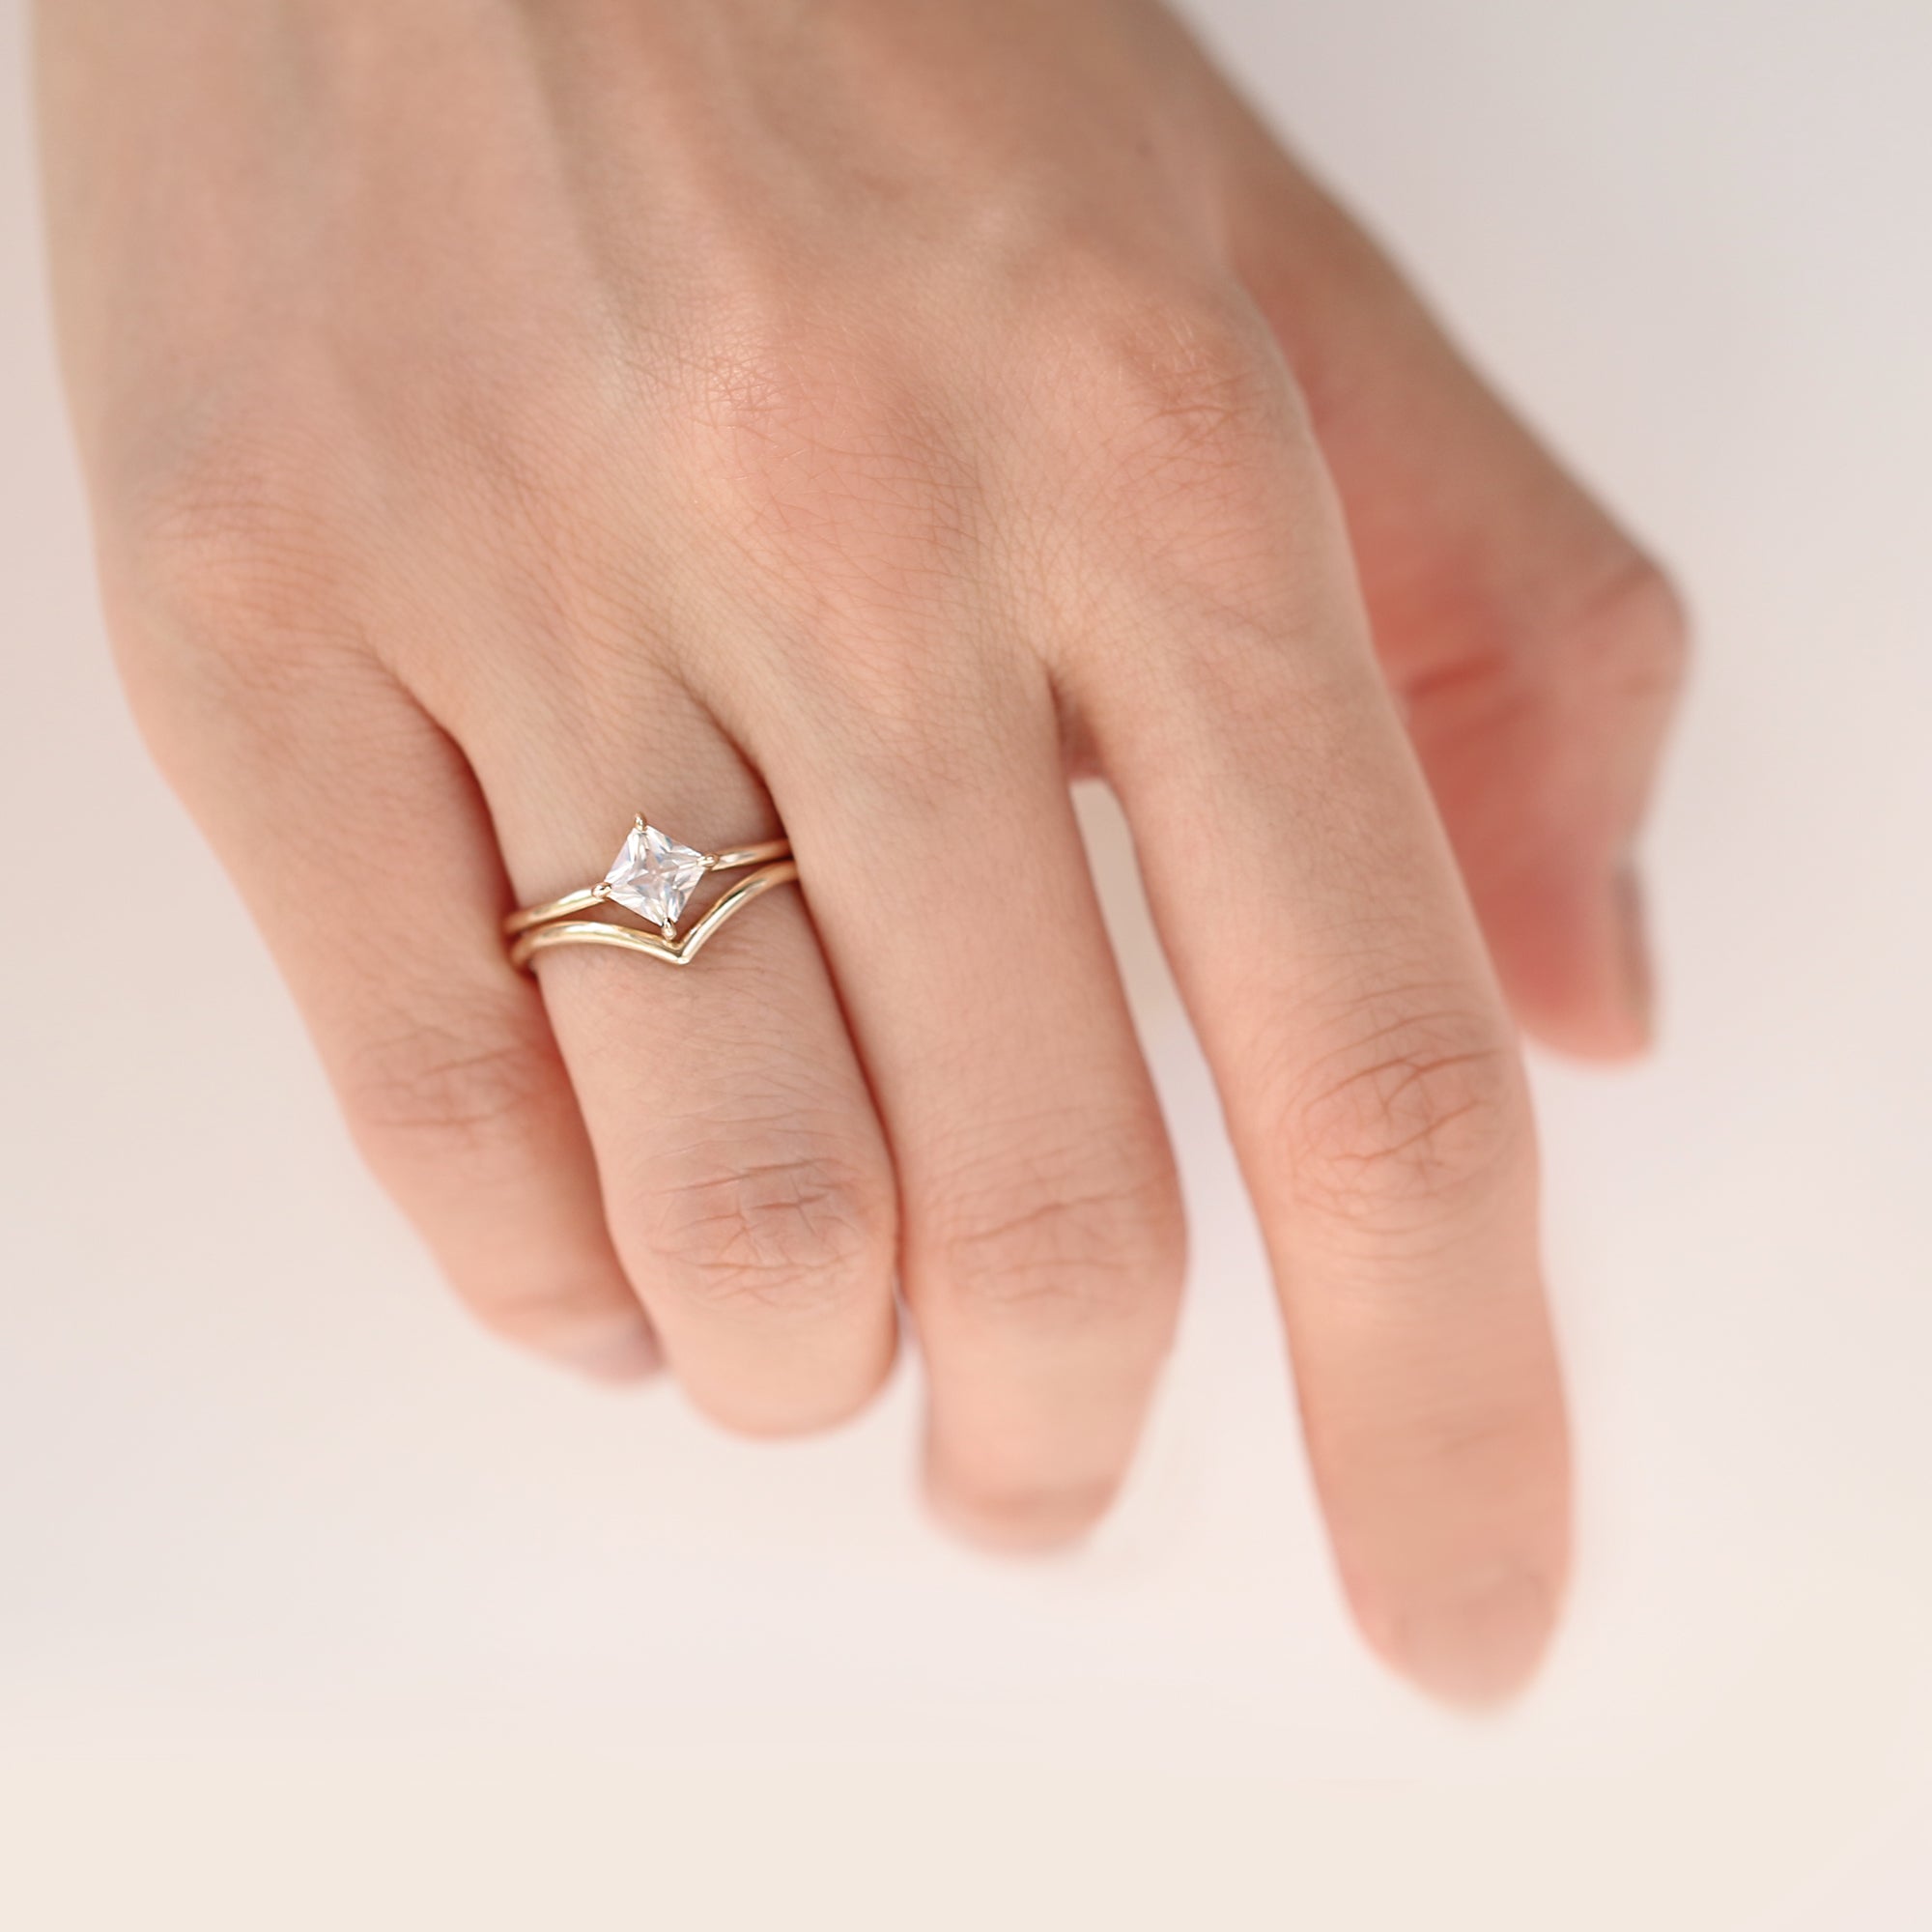 Chevron Ring by Jamie Park Jewelry